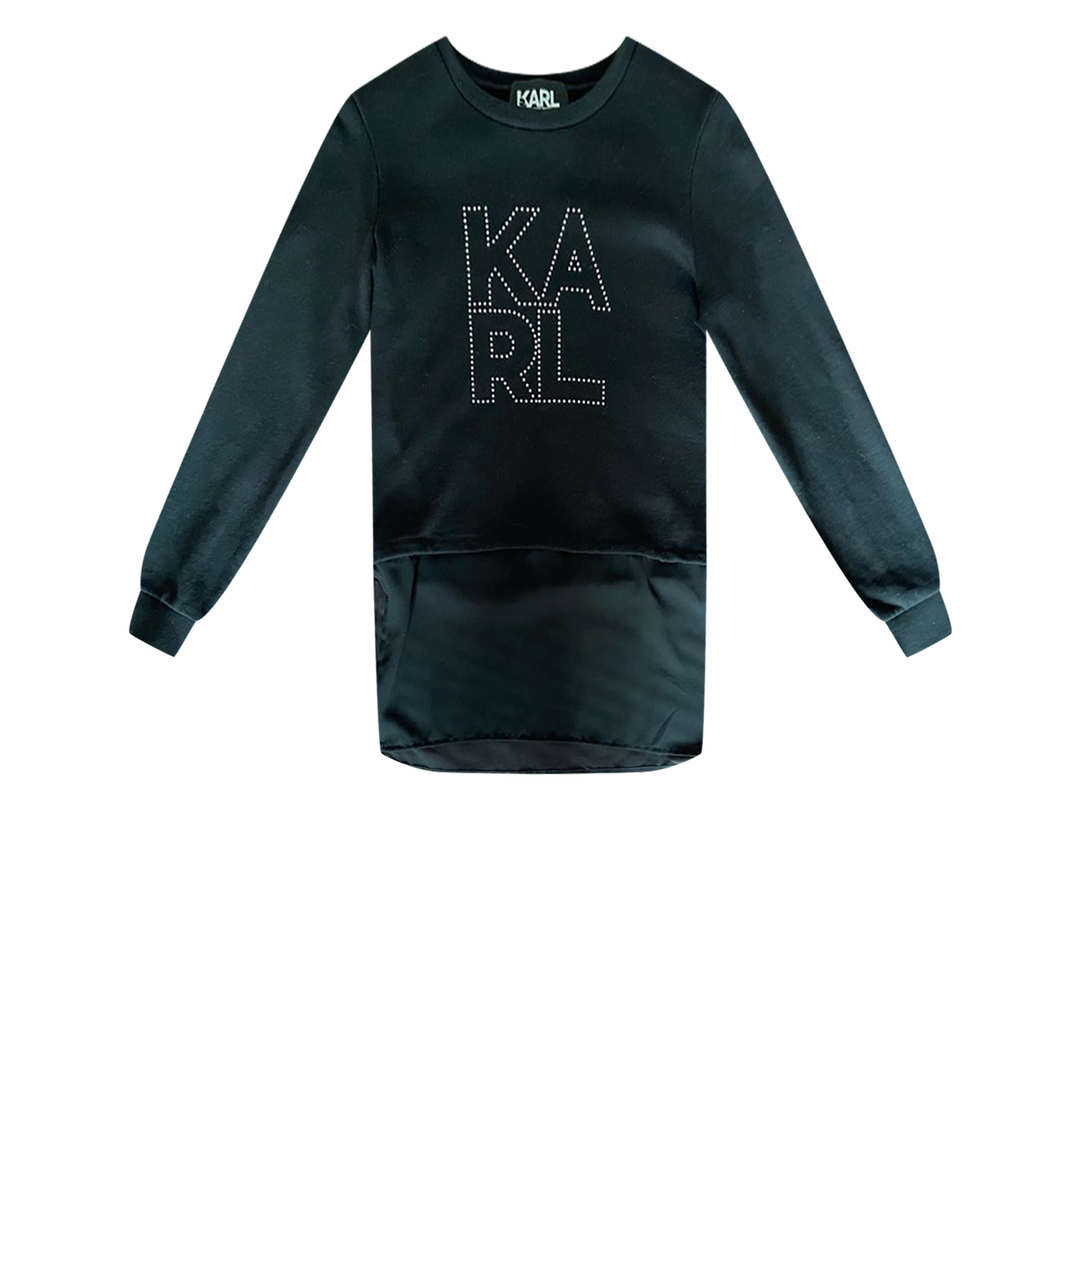 KARL LAGERFELD Черный хлопковый джемпер / свитер, фото 1